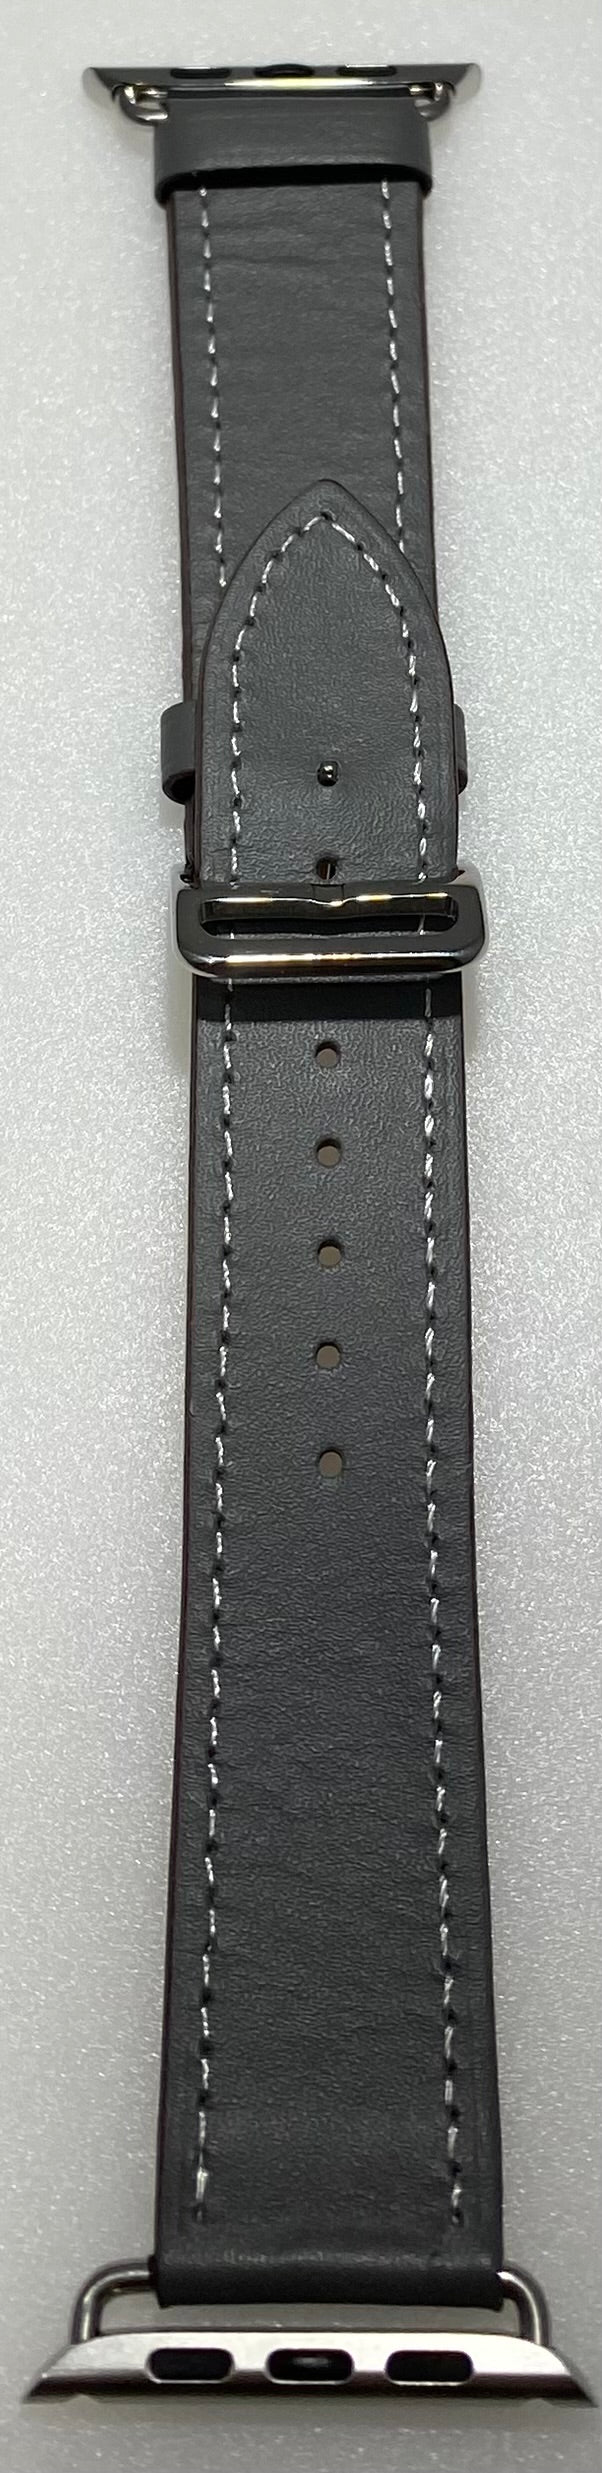 Apple iWatch Bands Fashion Watchband Leathers Strap Wristbands